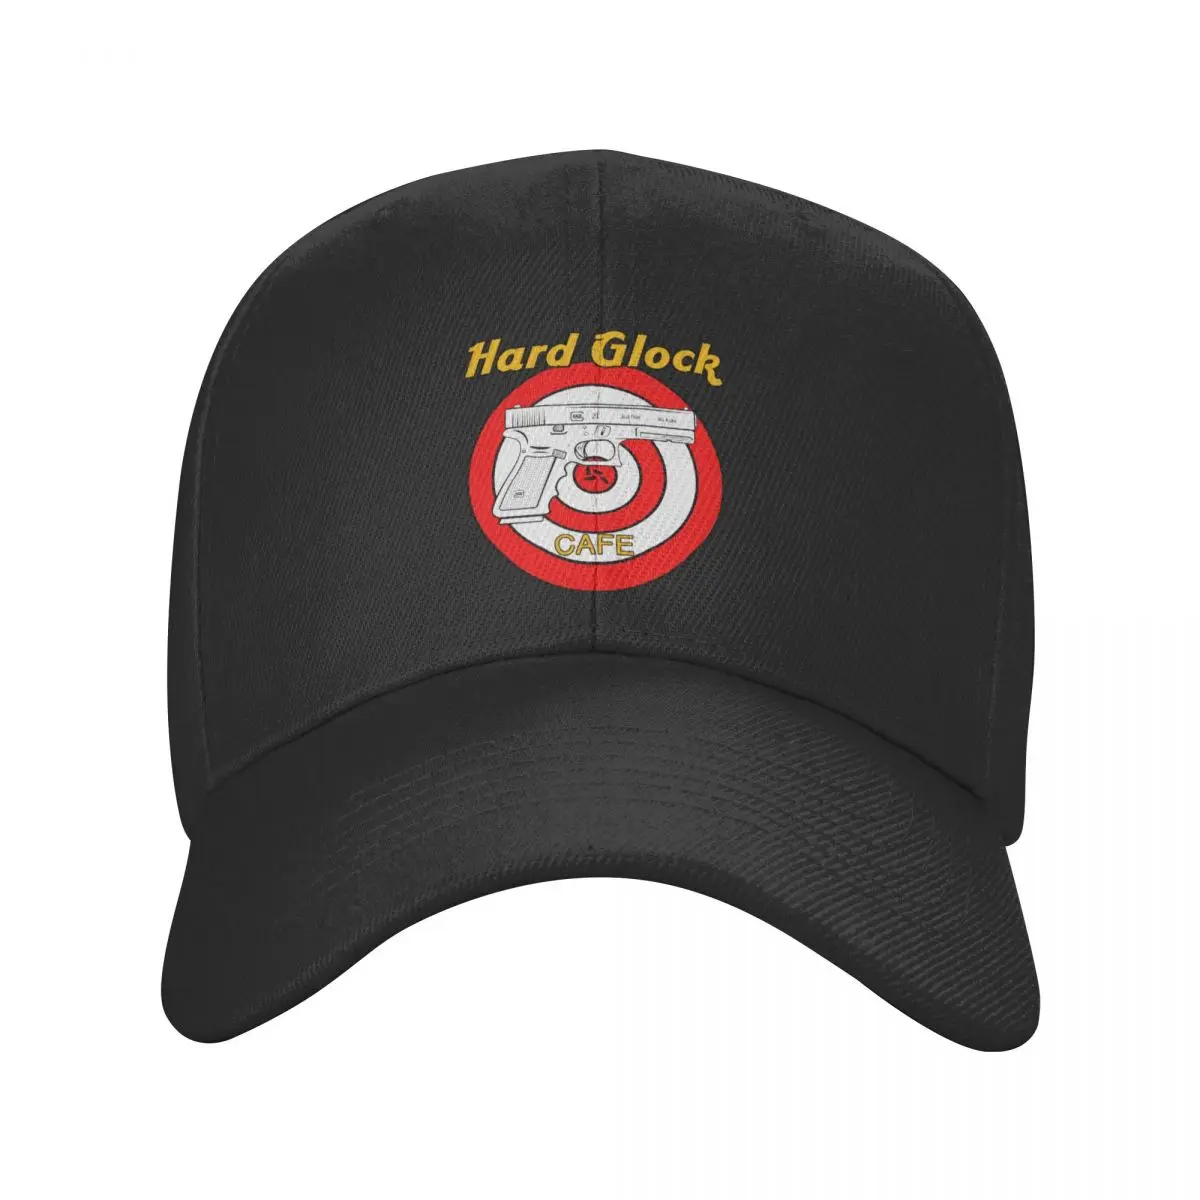 Hard Glock Cafe Baseball Cap Hip Hop Women Men's Adjustable USA Handgun Pistol Logo Dad Hat Autumn Snapback Hats